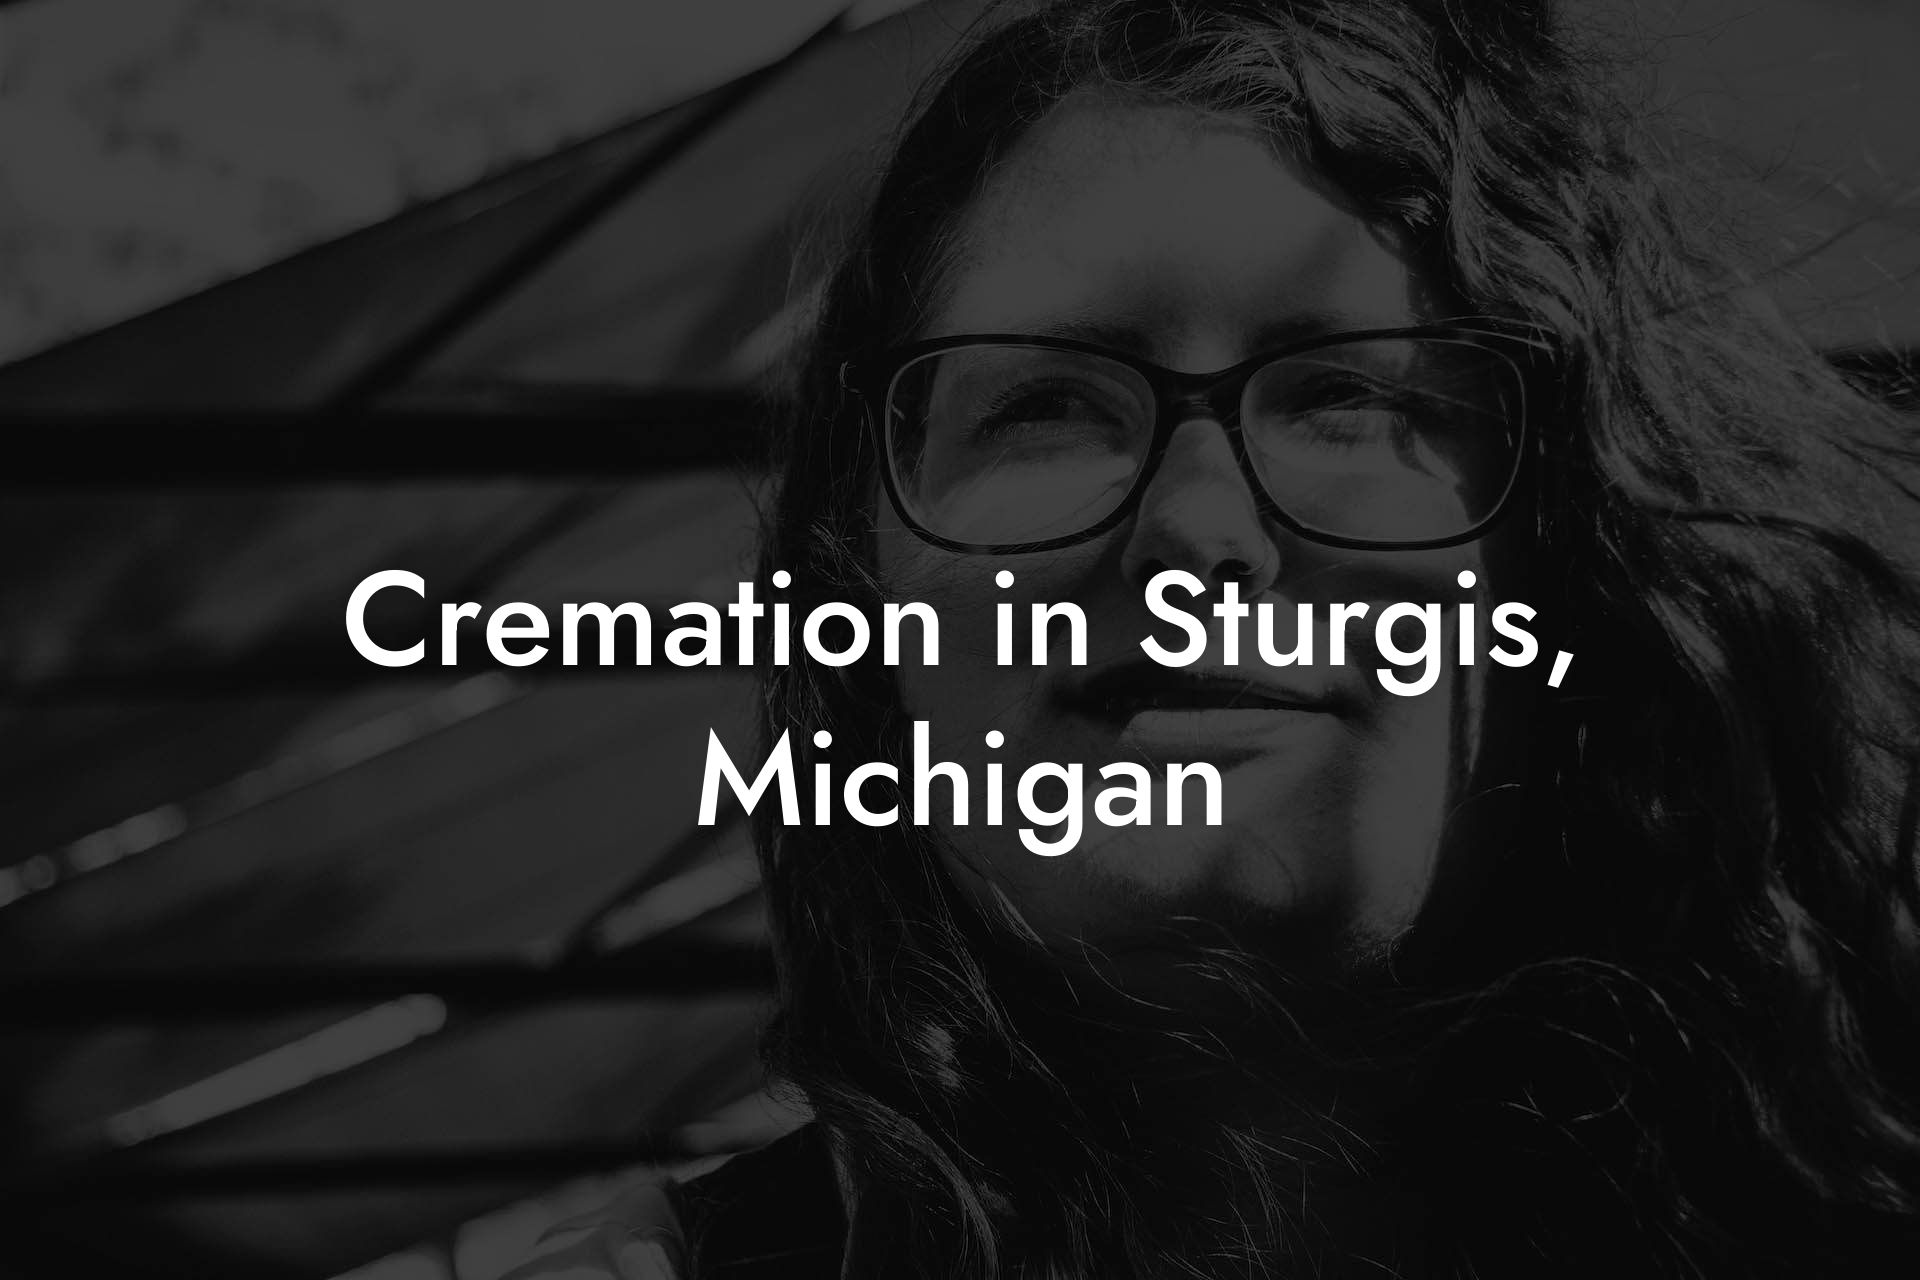 Cremation in Sturgis, Michigan